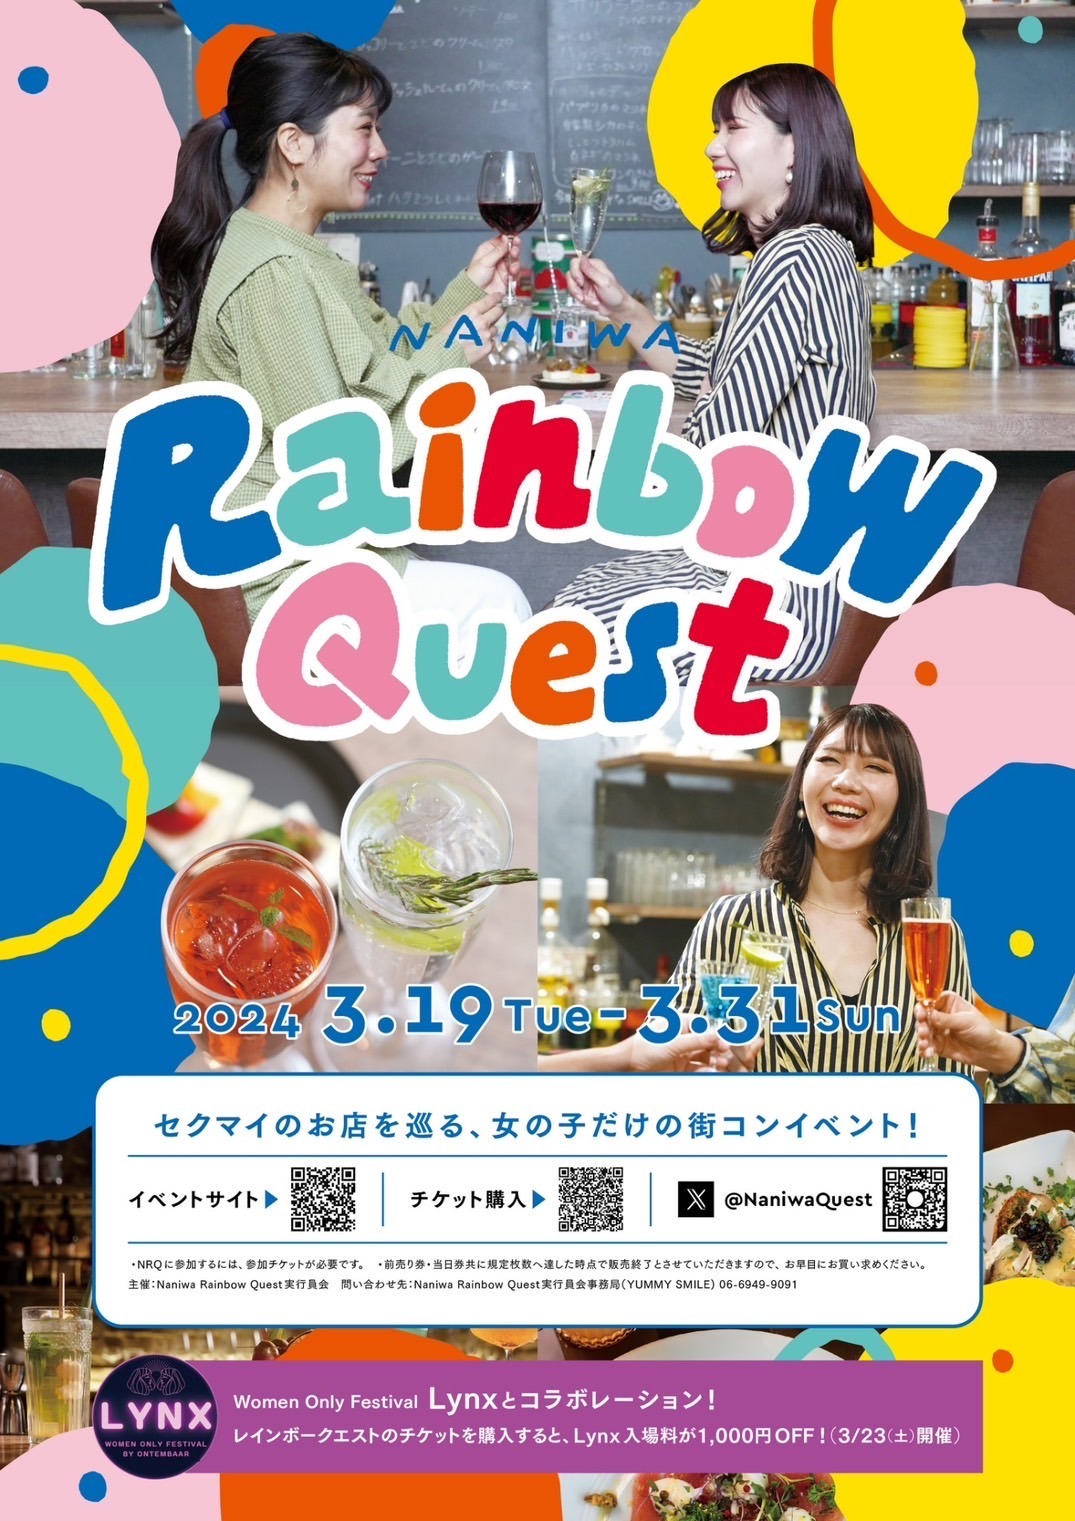 NANIWA Rainbow Quest